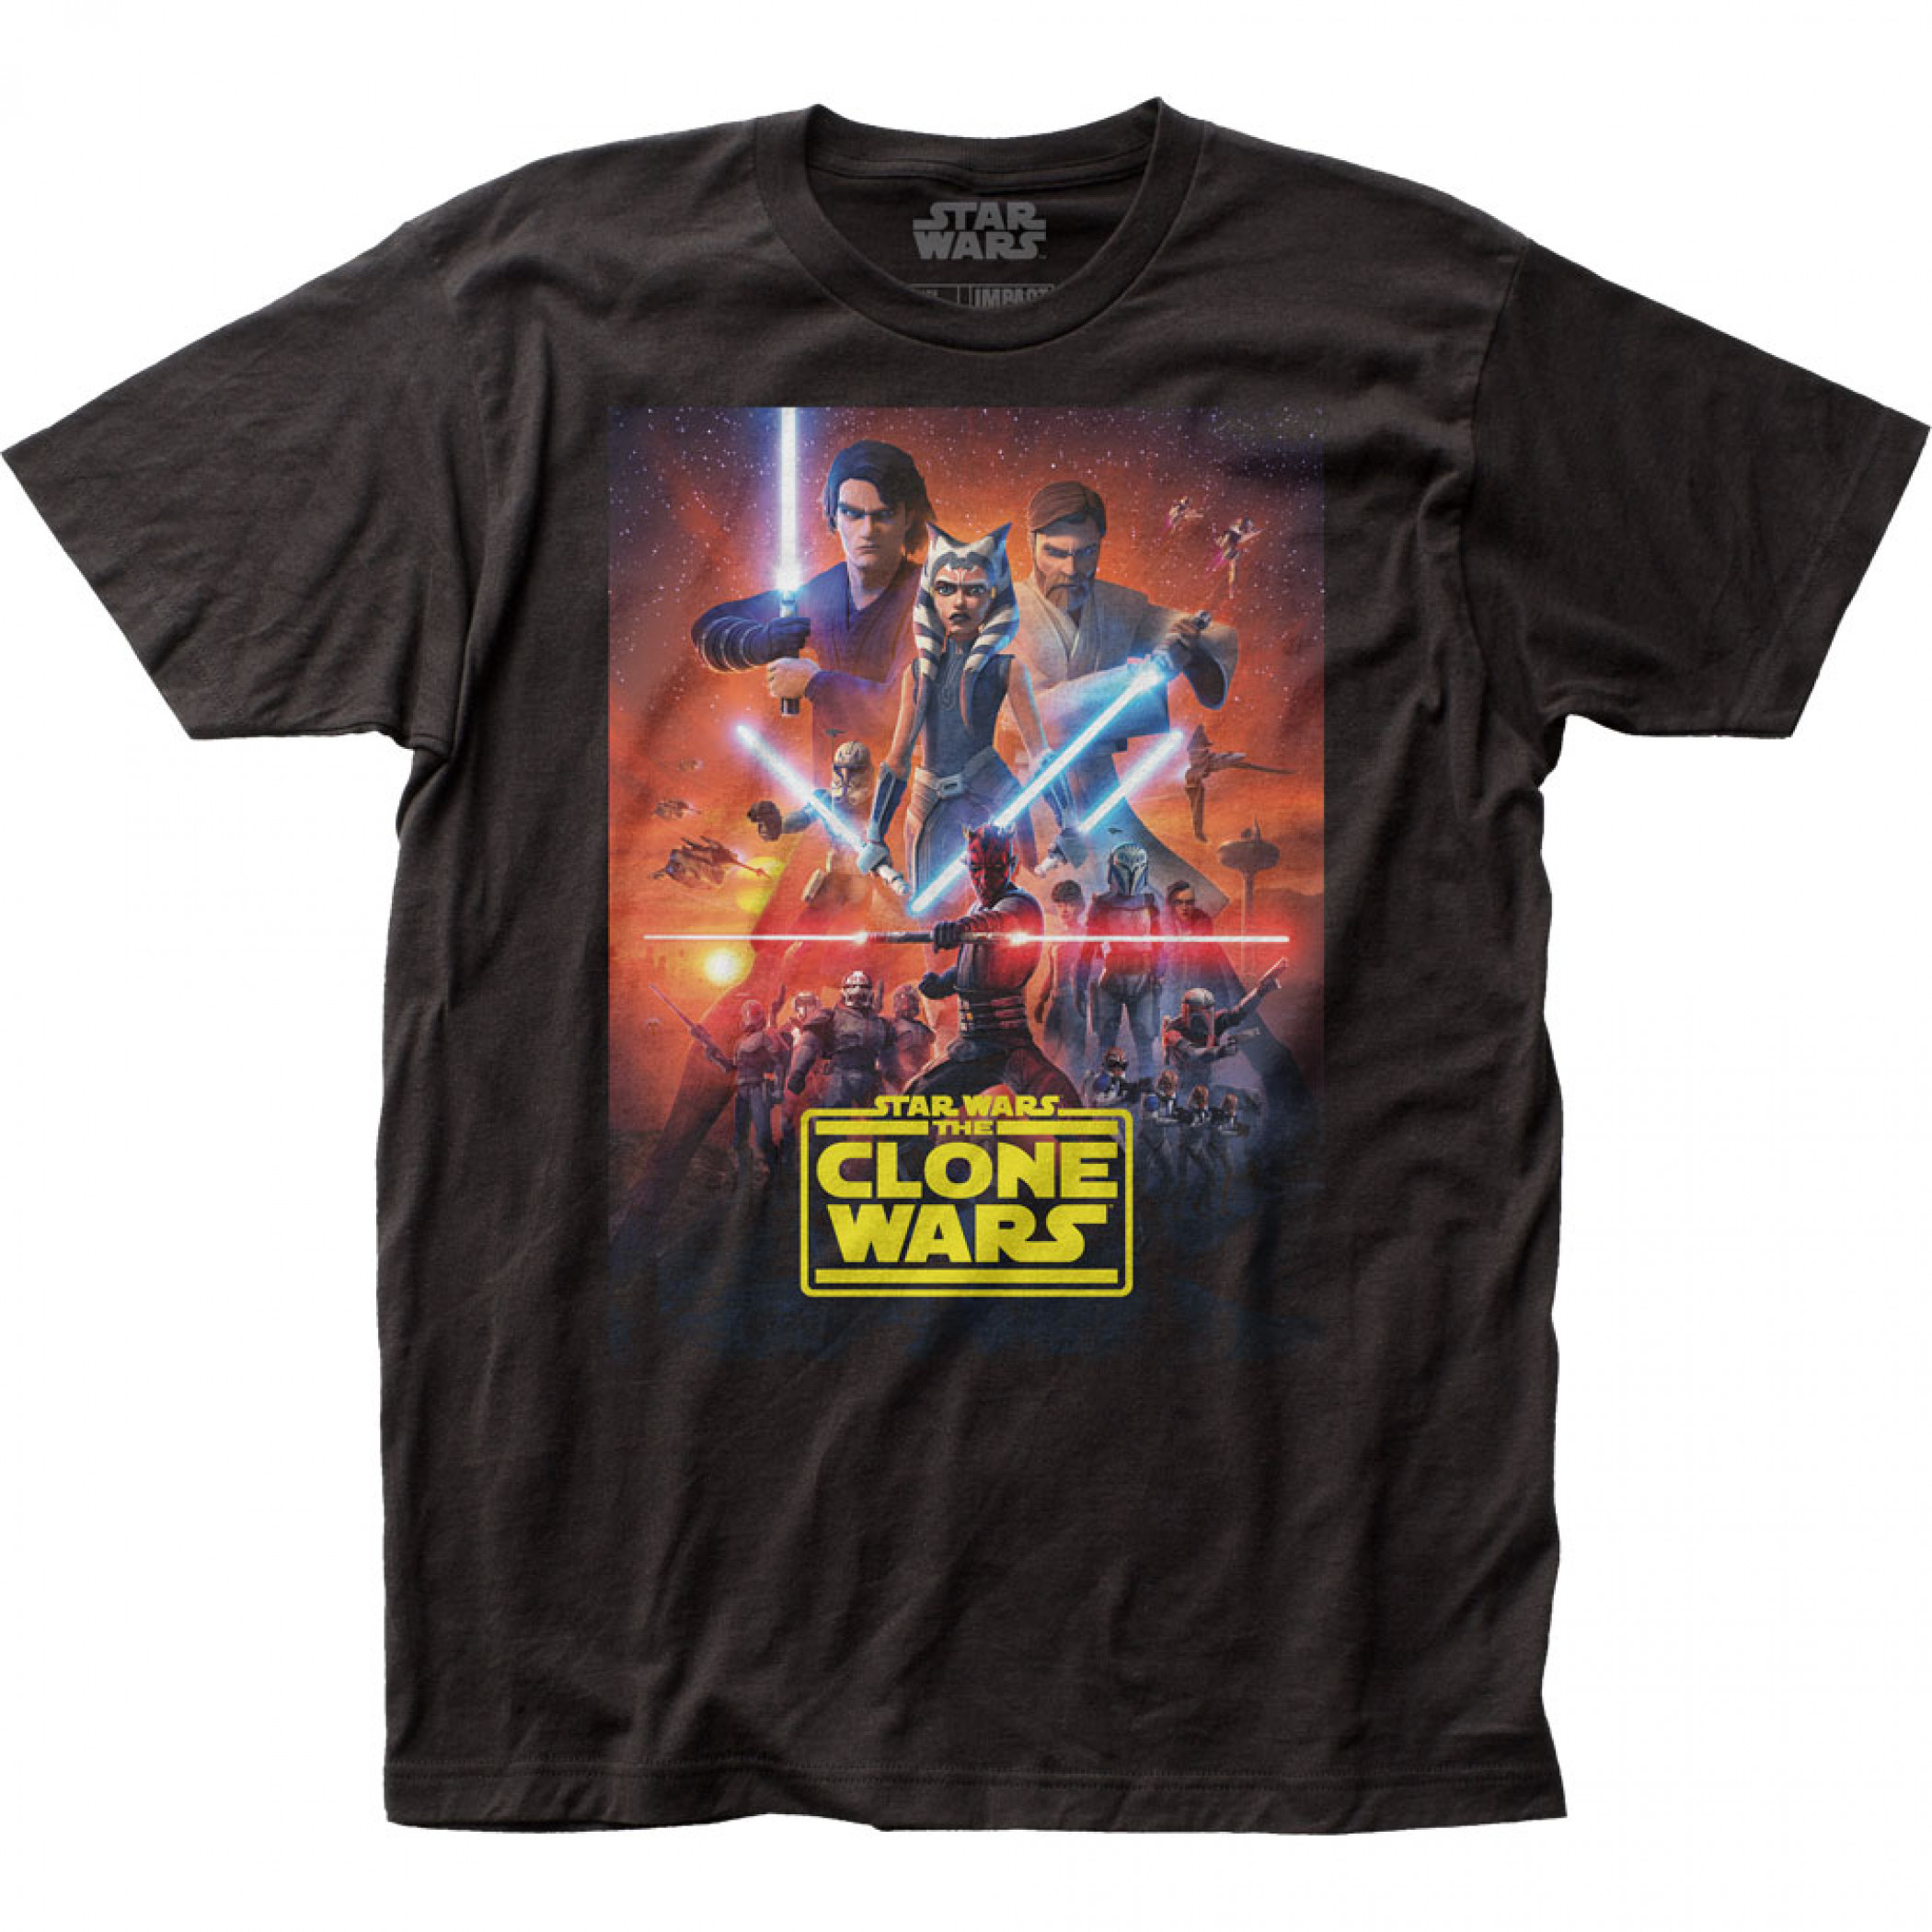 Star Wars The Clone Wars Poster T-Shirt